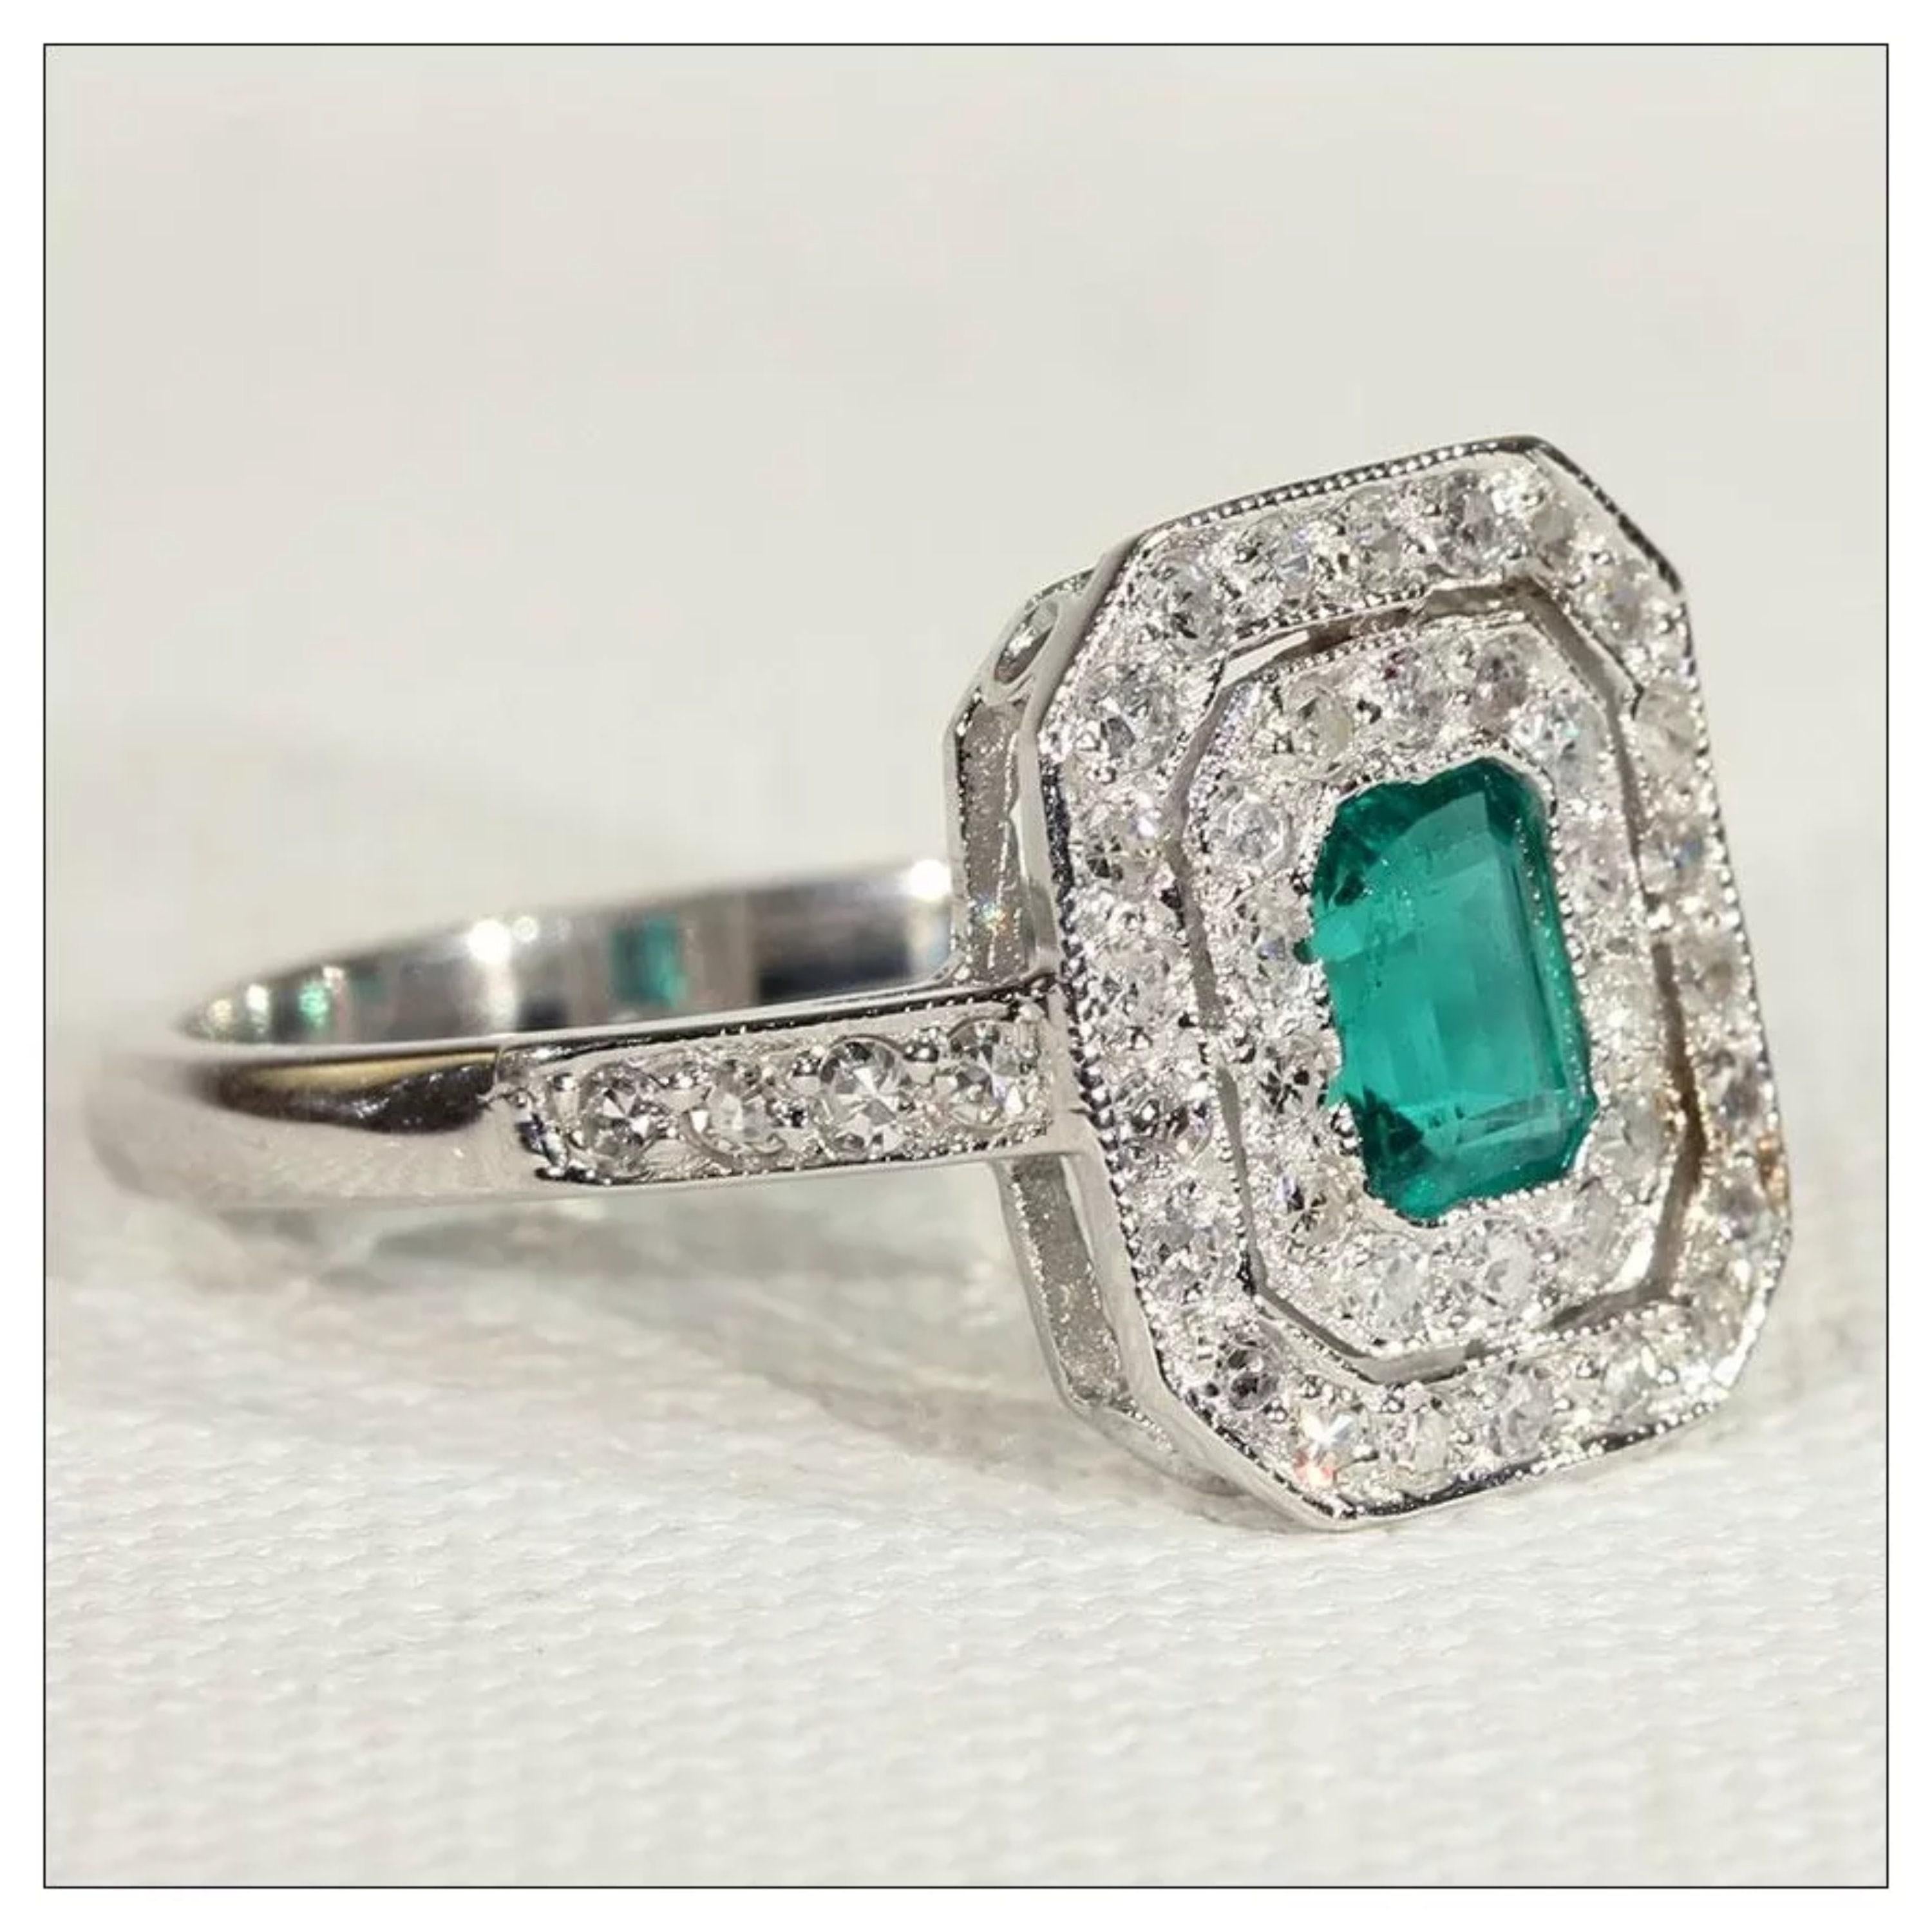 For Sale:  2 Carat Emerald Cut Emerald Diamond Engagement Ring, Halo Emerald Diamond Ring 5